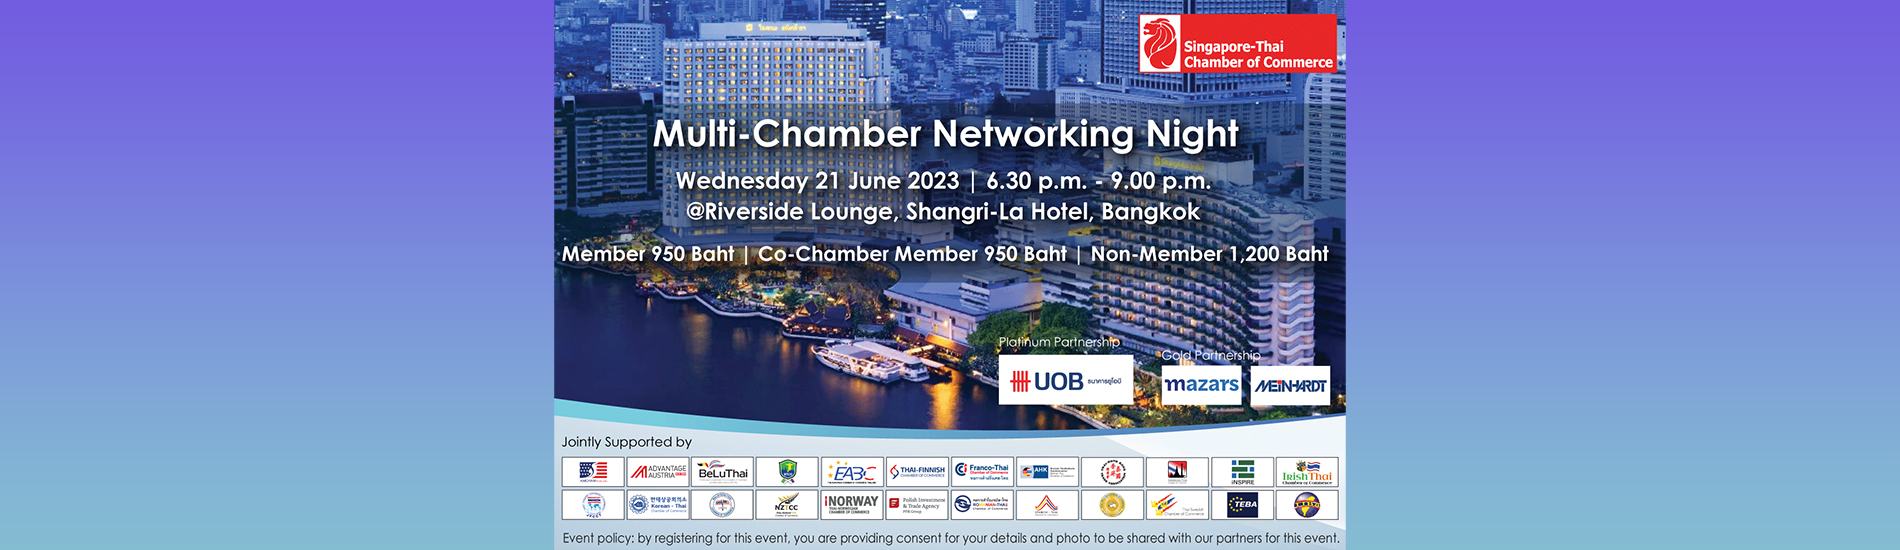 Multi-Chamber Networking Night at Shangri-La Hotel, Bangkok